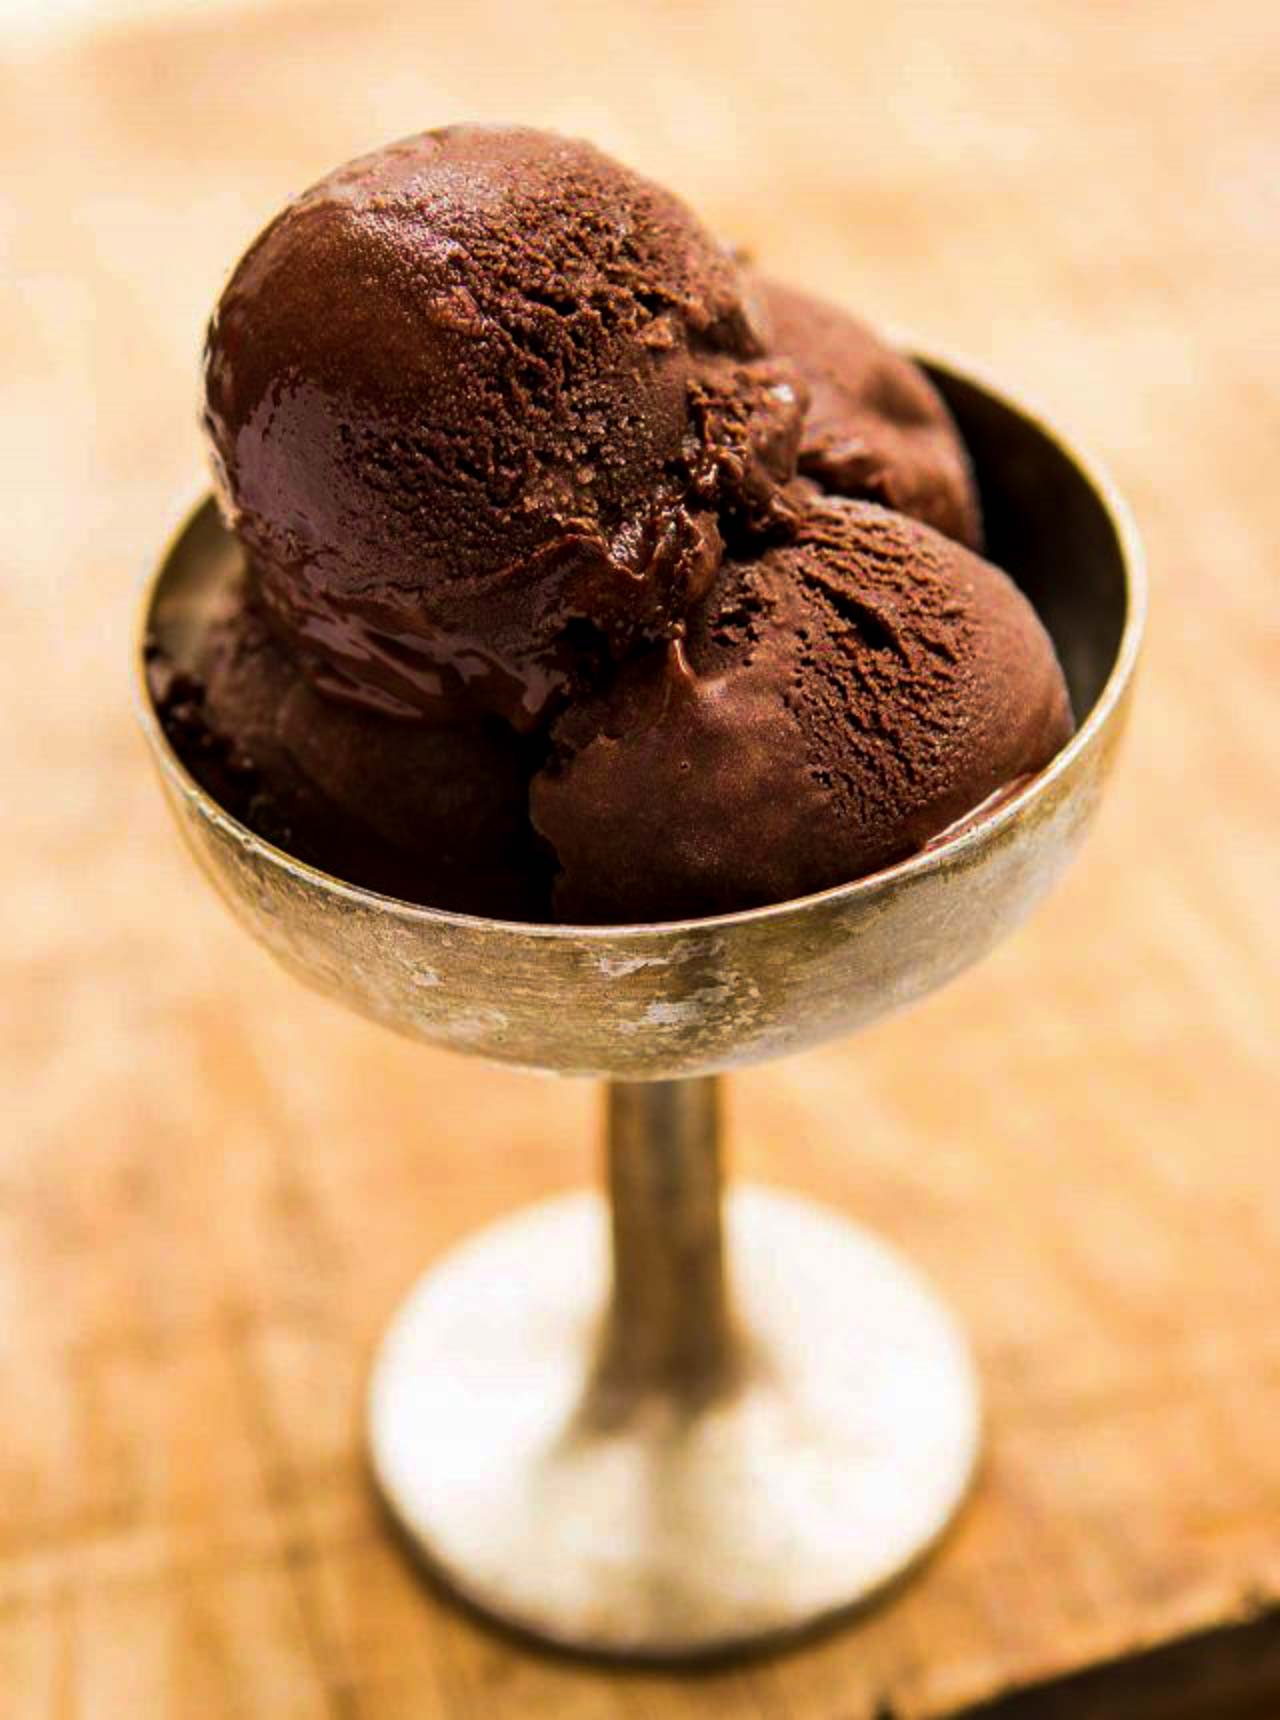 A rich, deep-dark chocolate ice cream